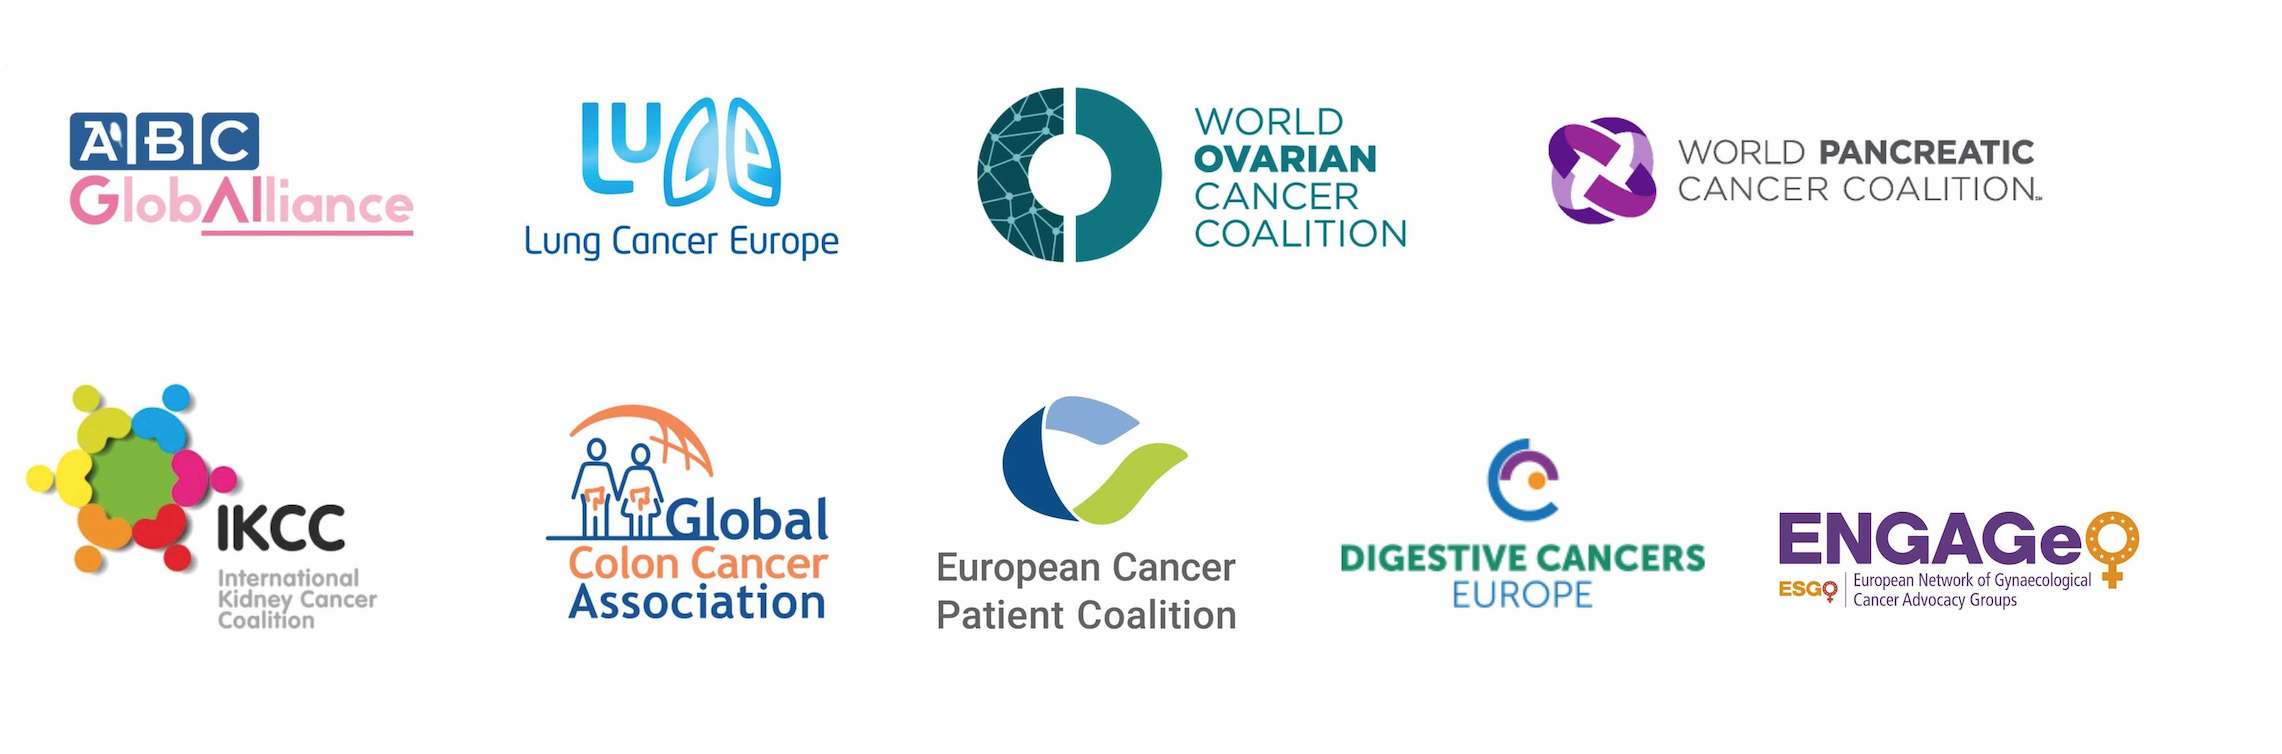 NNSC_Partners-Global联盟, 肺癌欧洲, 词卵巢, 词胰腺, IKKC, 全球硬币癌症协会, 欧洲癌症患者, 消化系统癌症, 参与